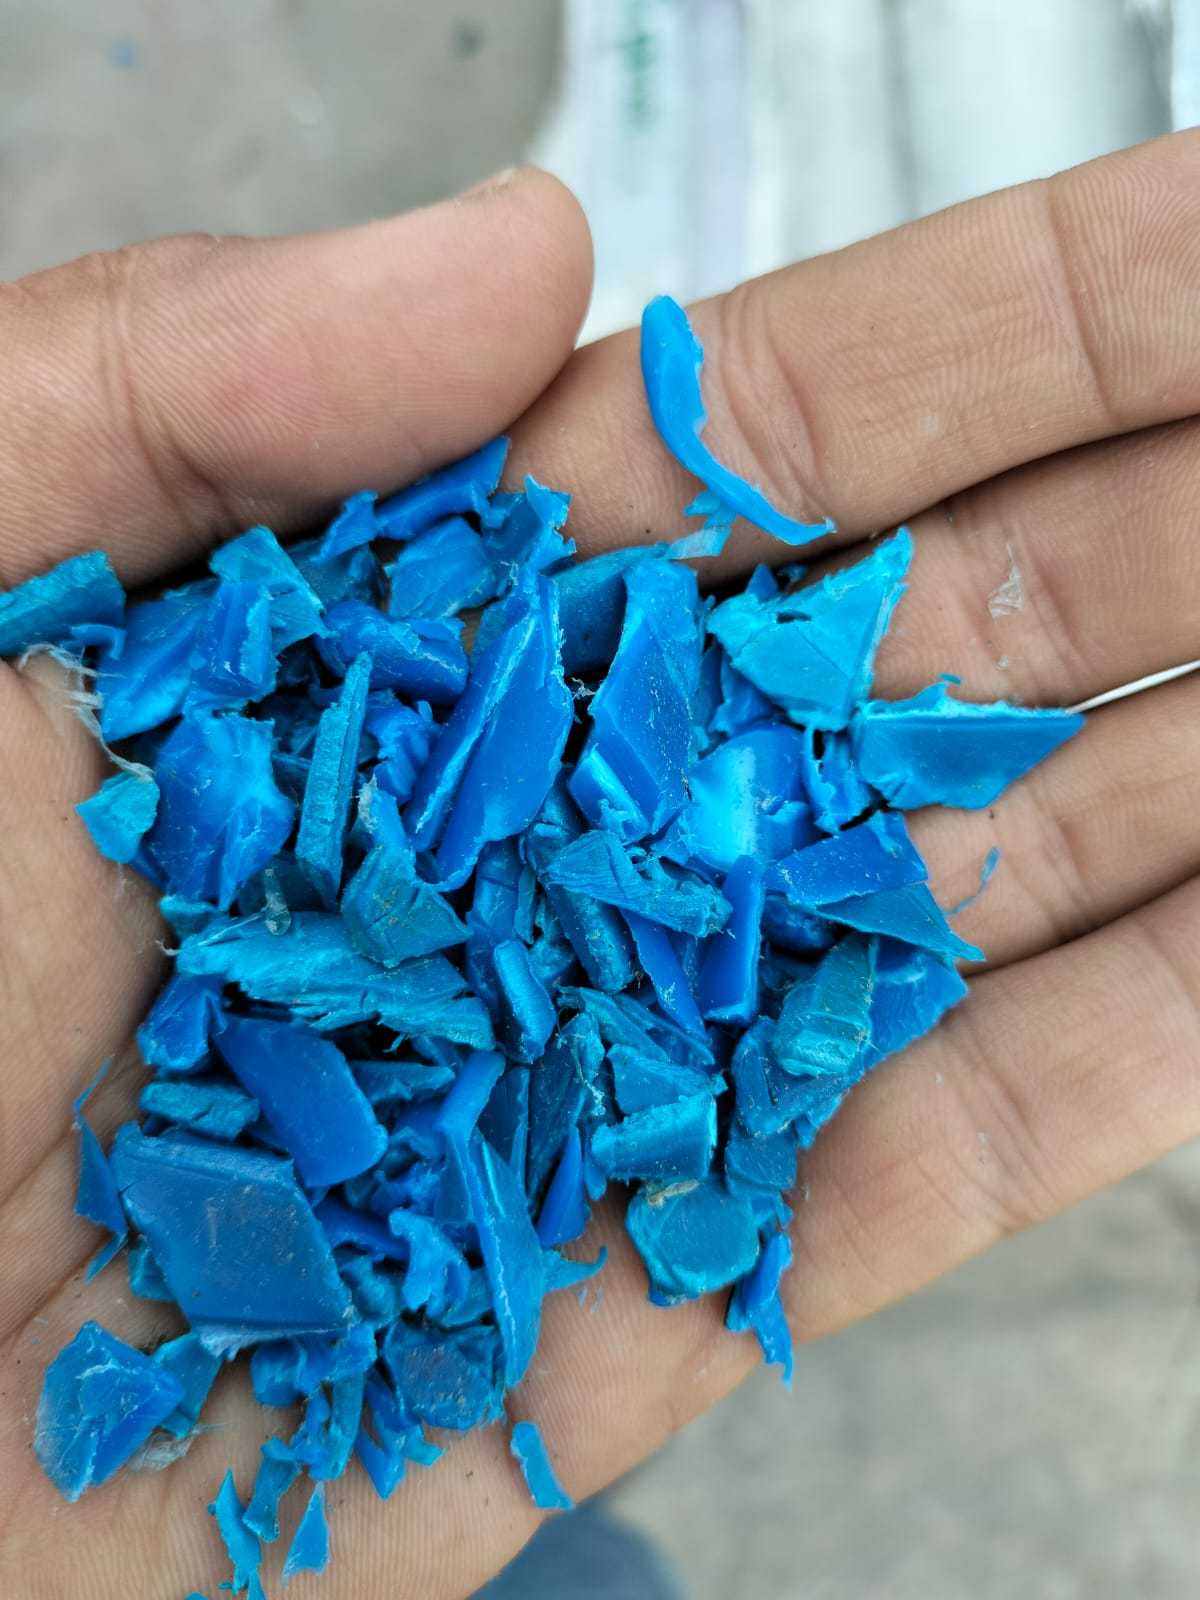 BLUE DRUM GRINDING HDPE Scrap Blow morbi gujarat india Plastic4trade